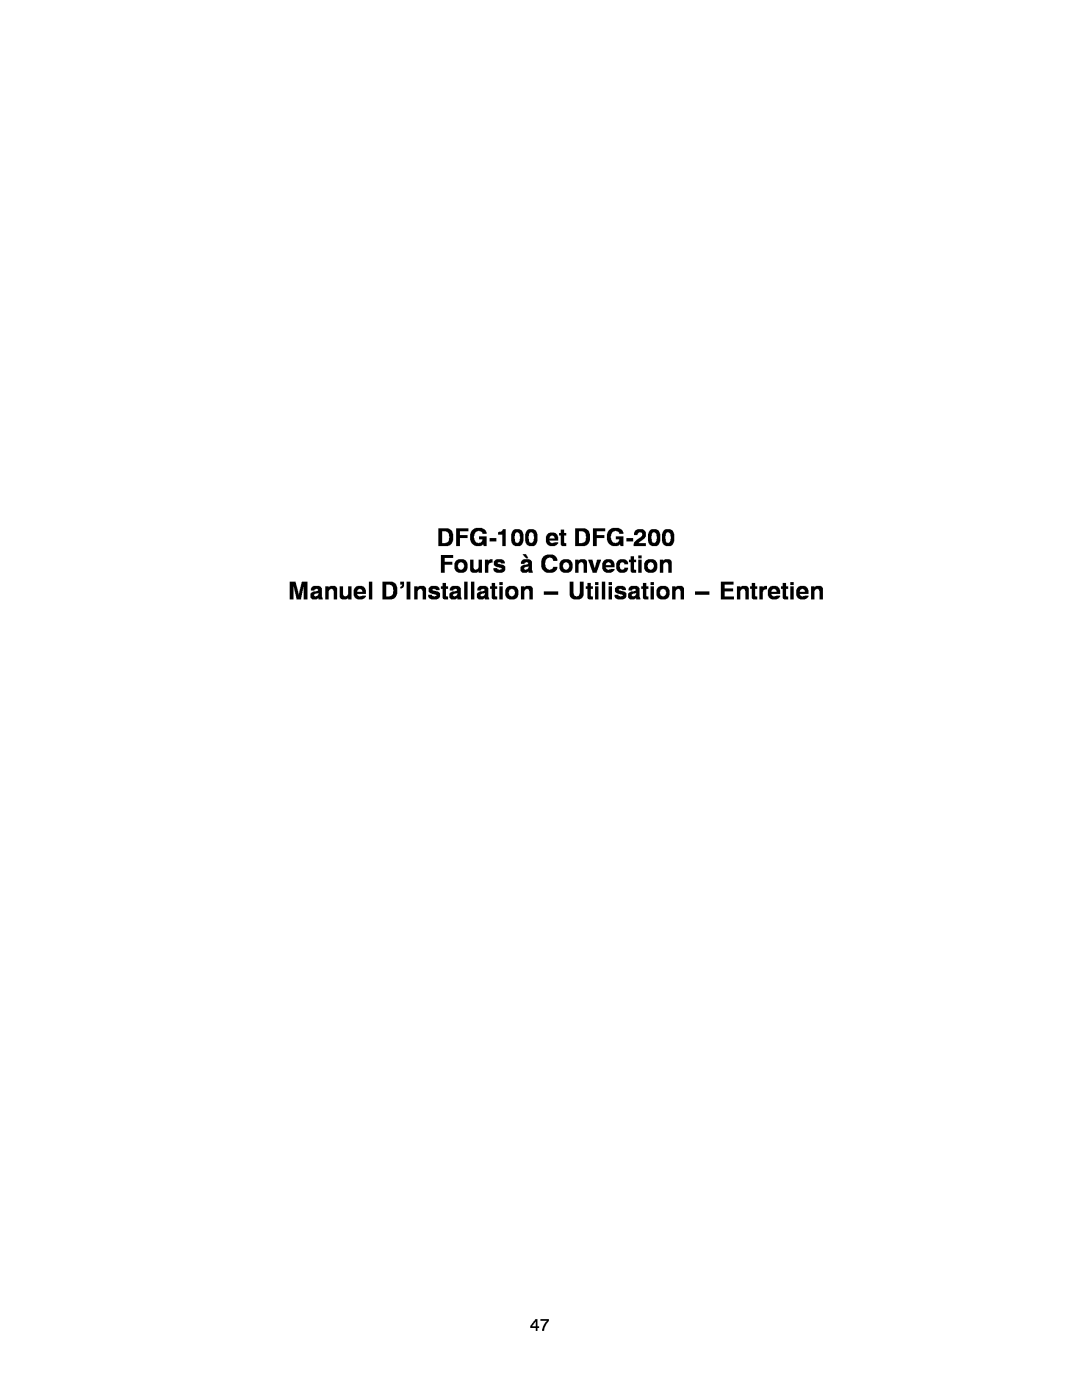 Blodgett manual Manuel D’Installation --- Utilisation --- Entretien, DFG-100 et DFG-200 Fours à Convection 